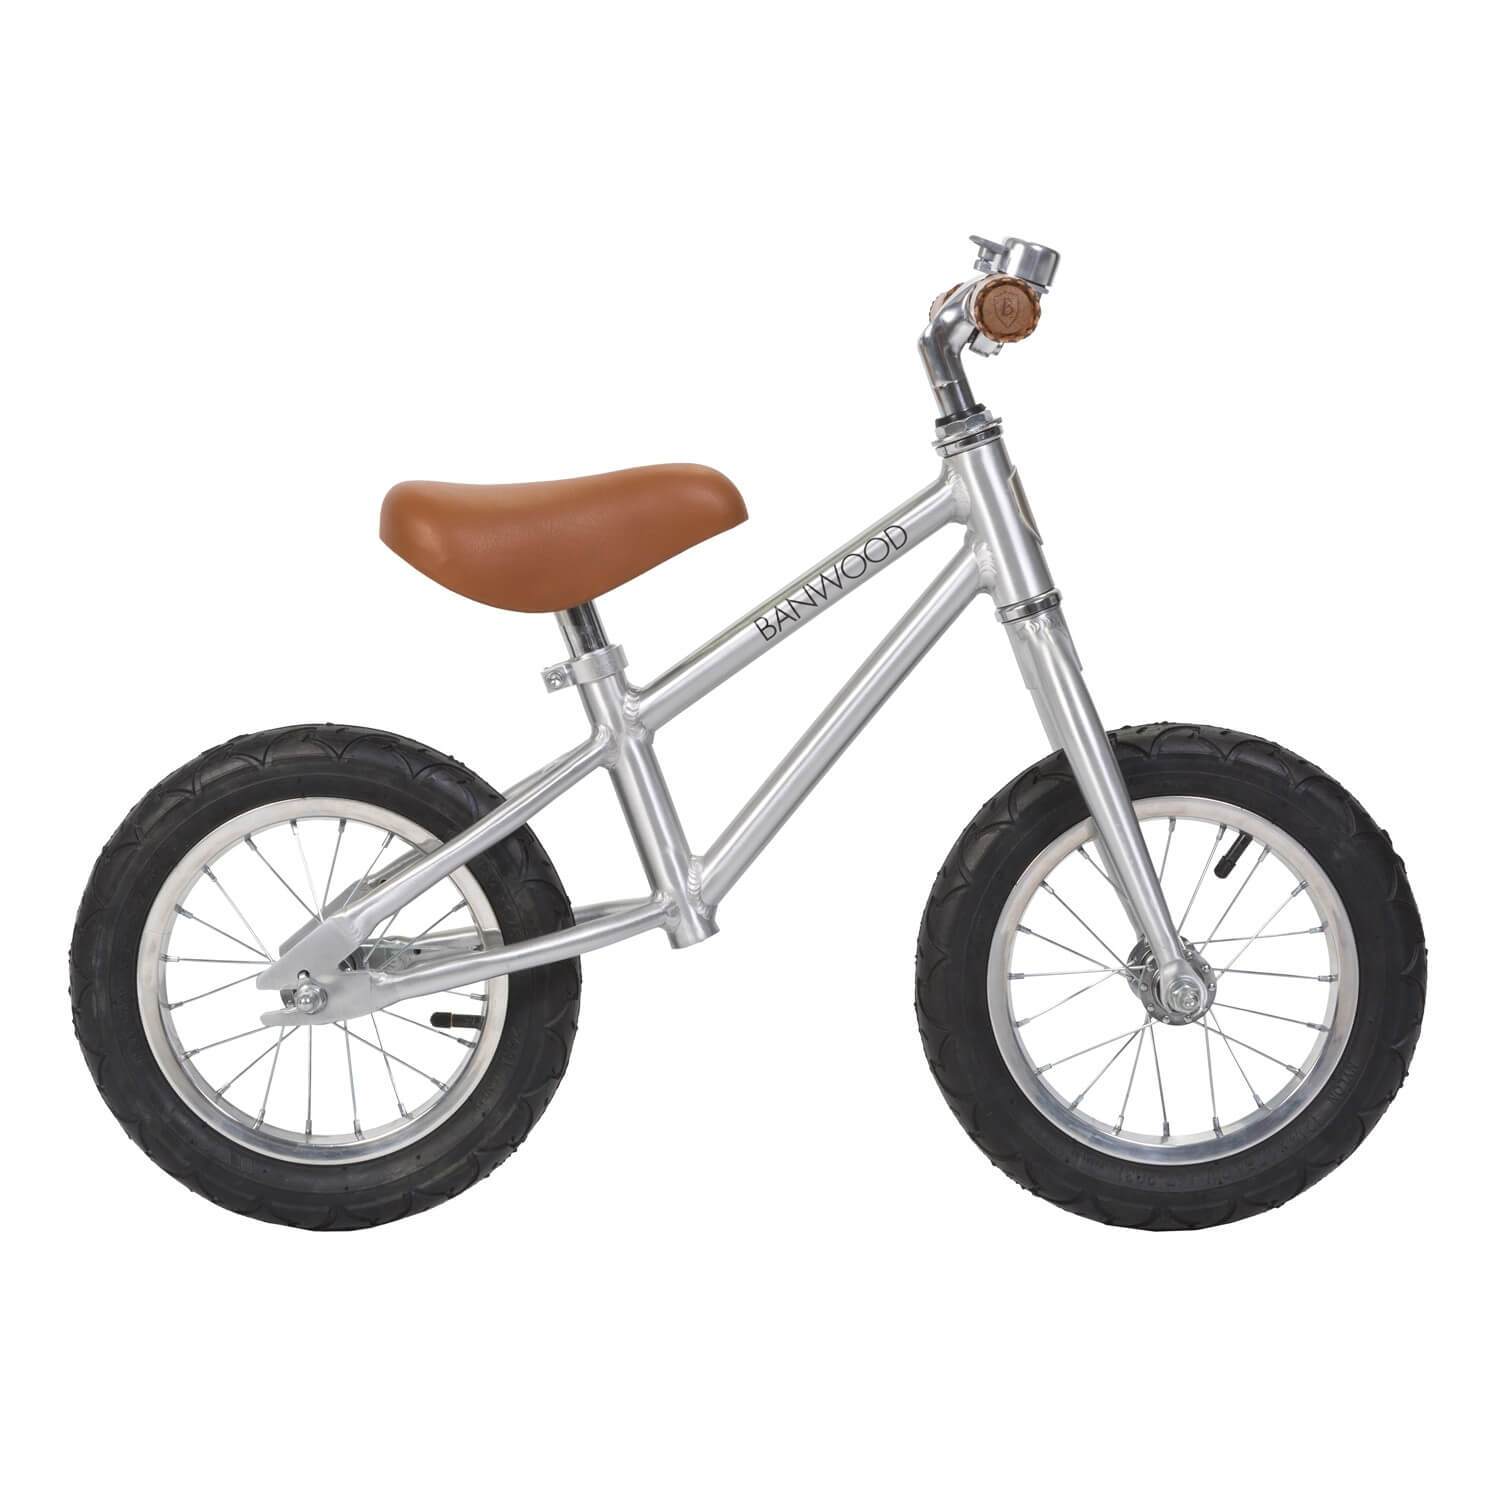 Banwood First Go Kids Balance Bike - Chrome Edition!